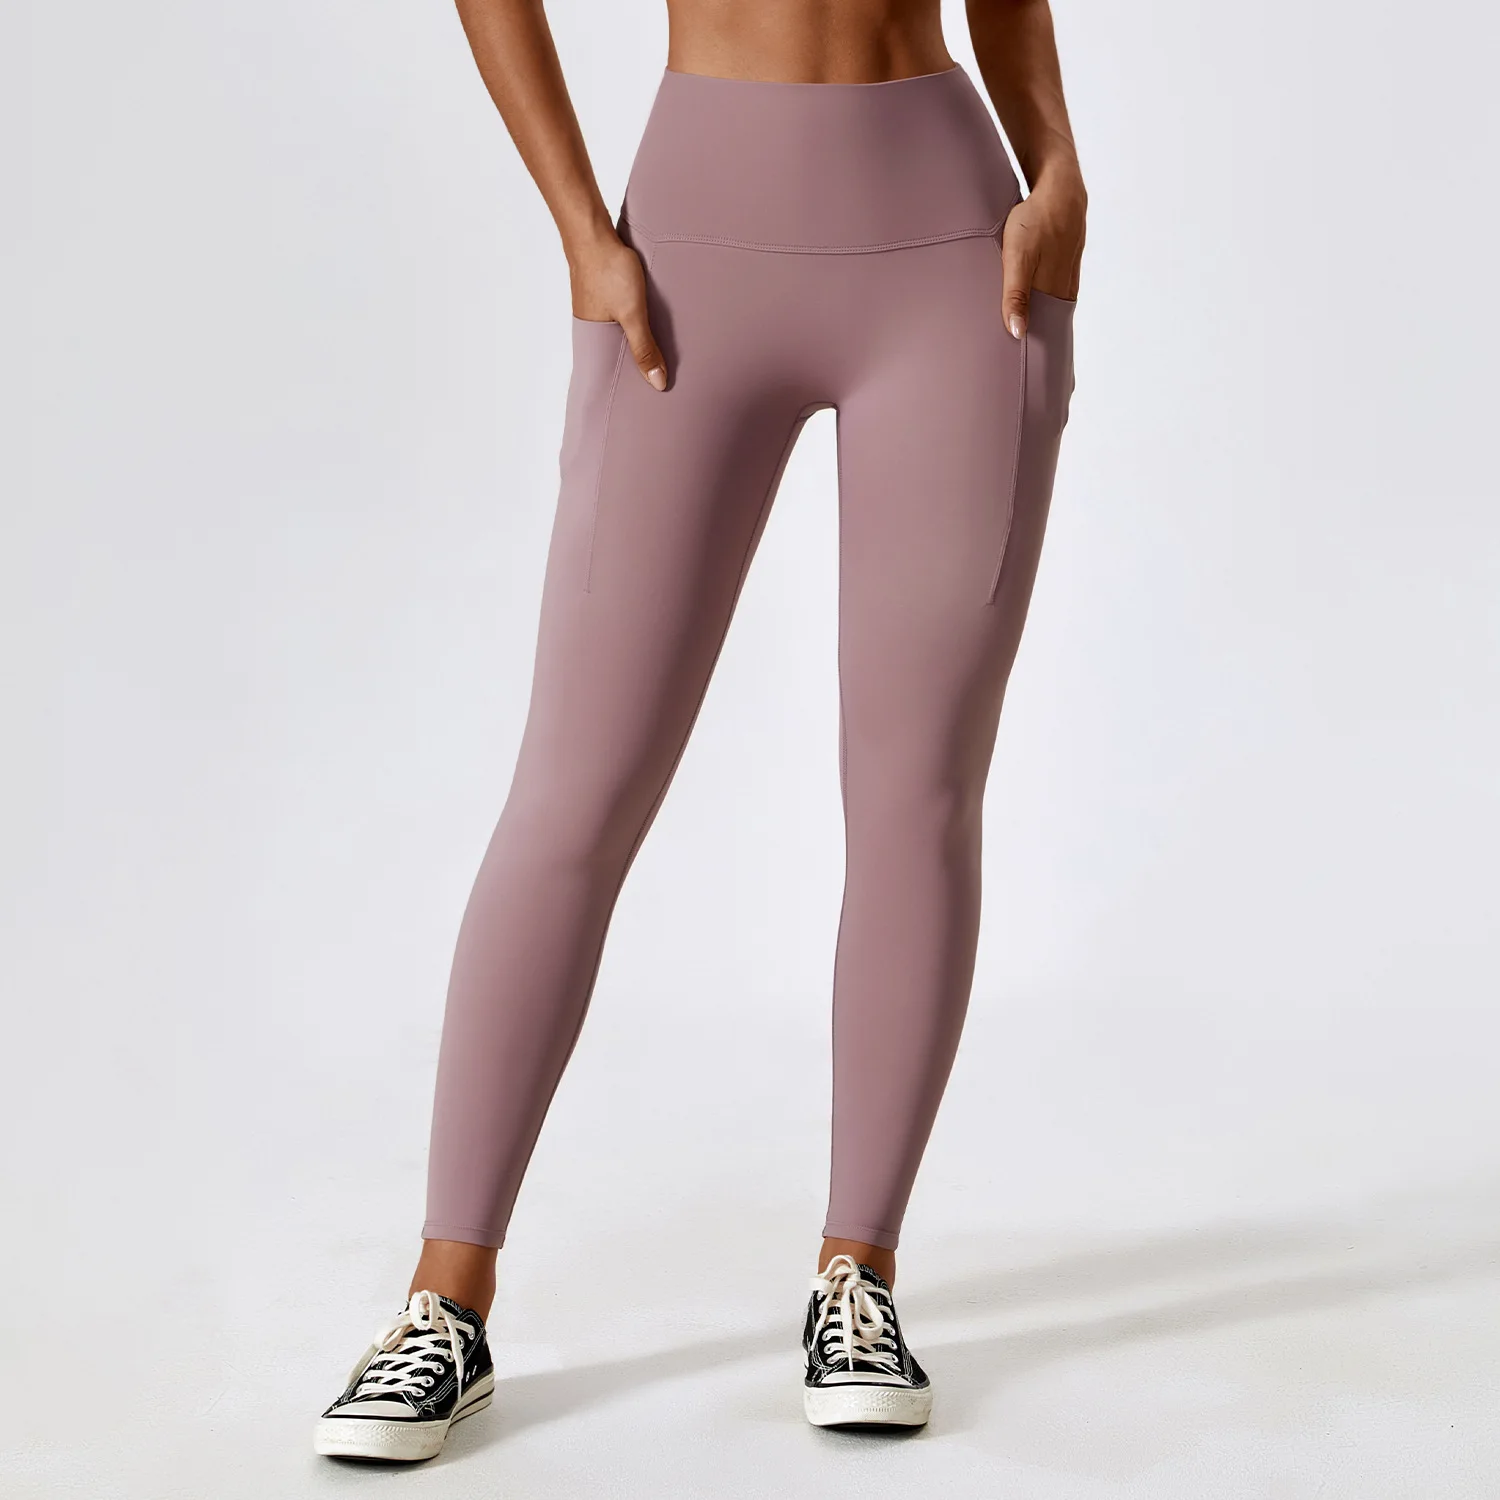 https://ae01.alicdn.com/kf/Sc836a34a8c104bd8b51f33ff5656edc1D/Pocket-Leggings-Women-High-Waist-Sexy-Push-Up-Butt-Yoga-Pants-Gym-Fitness-Legging-Tummy-Control.jpg